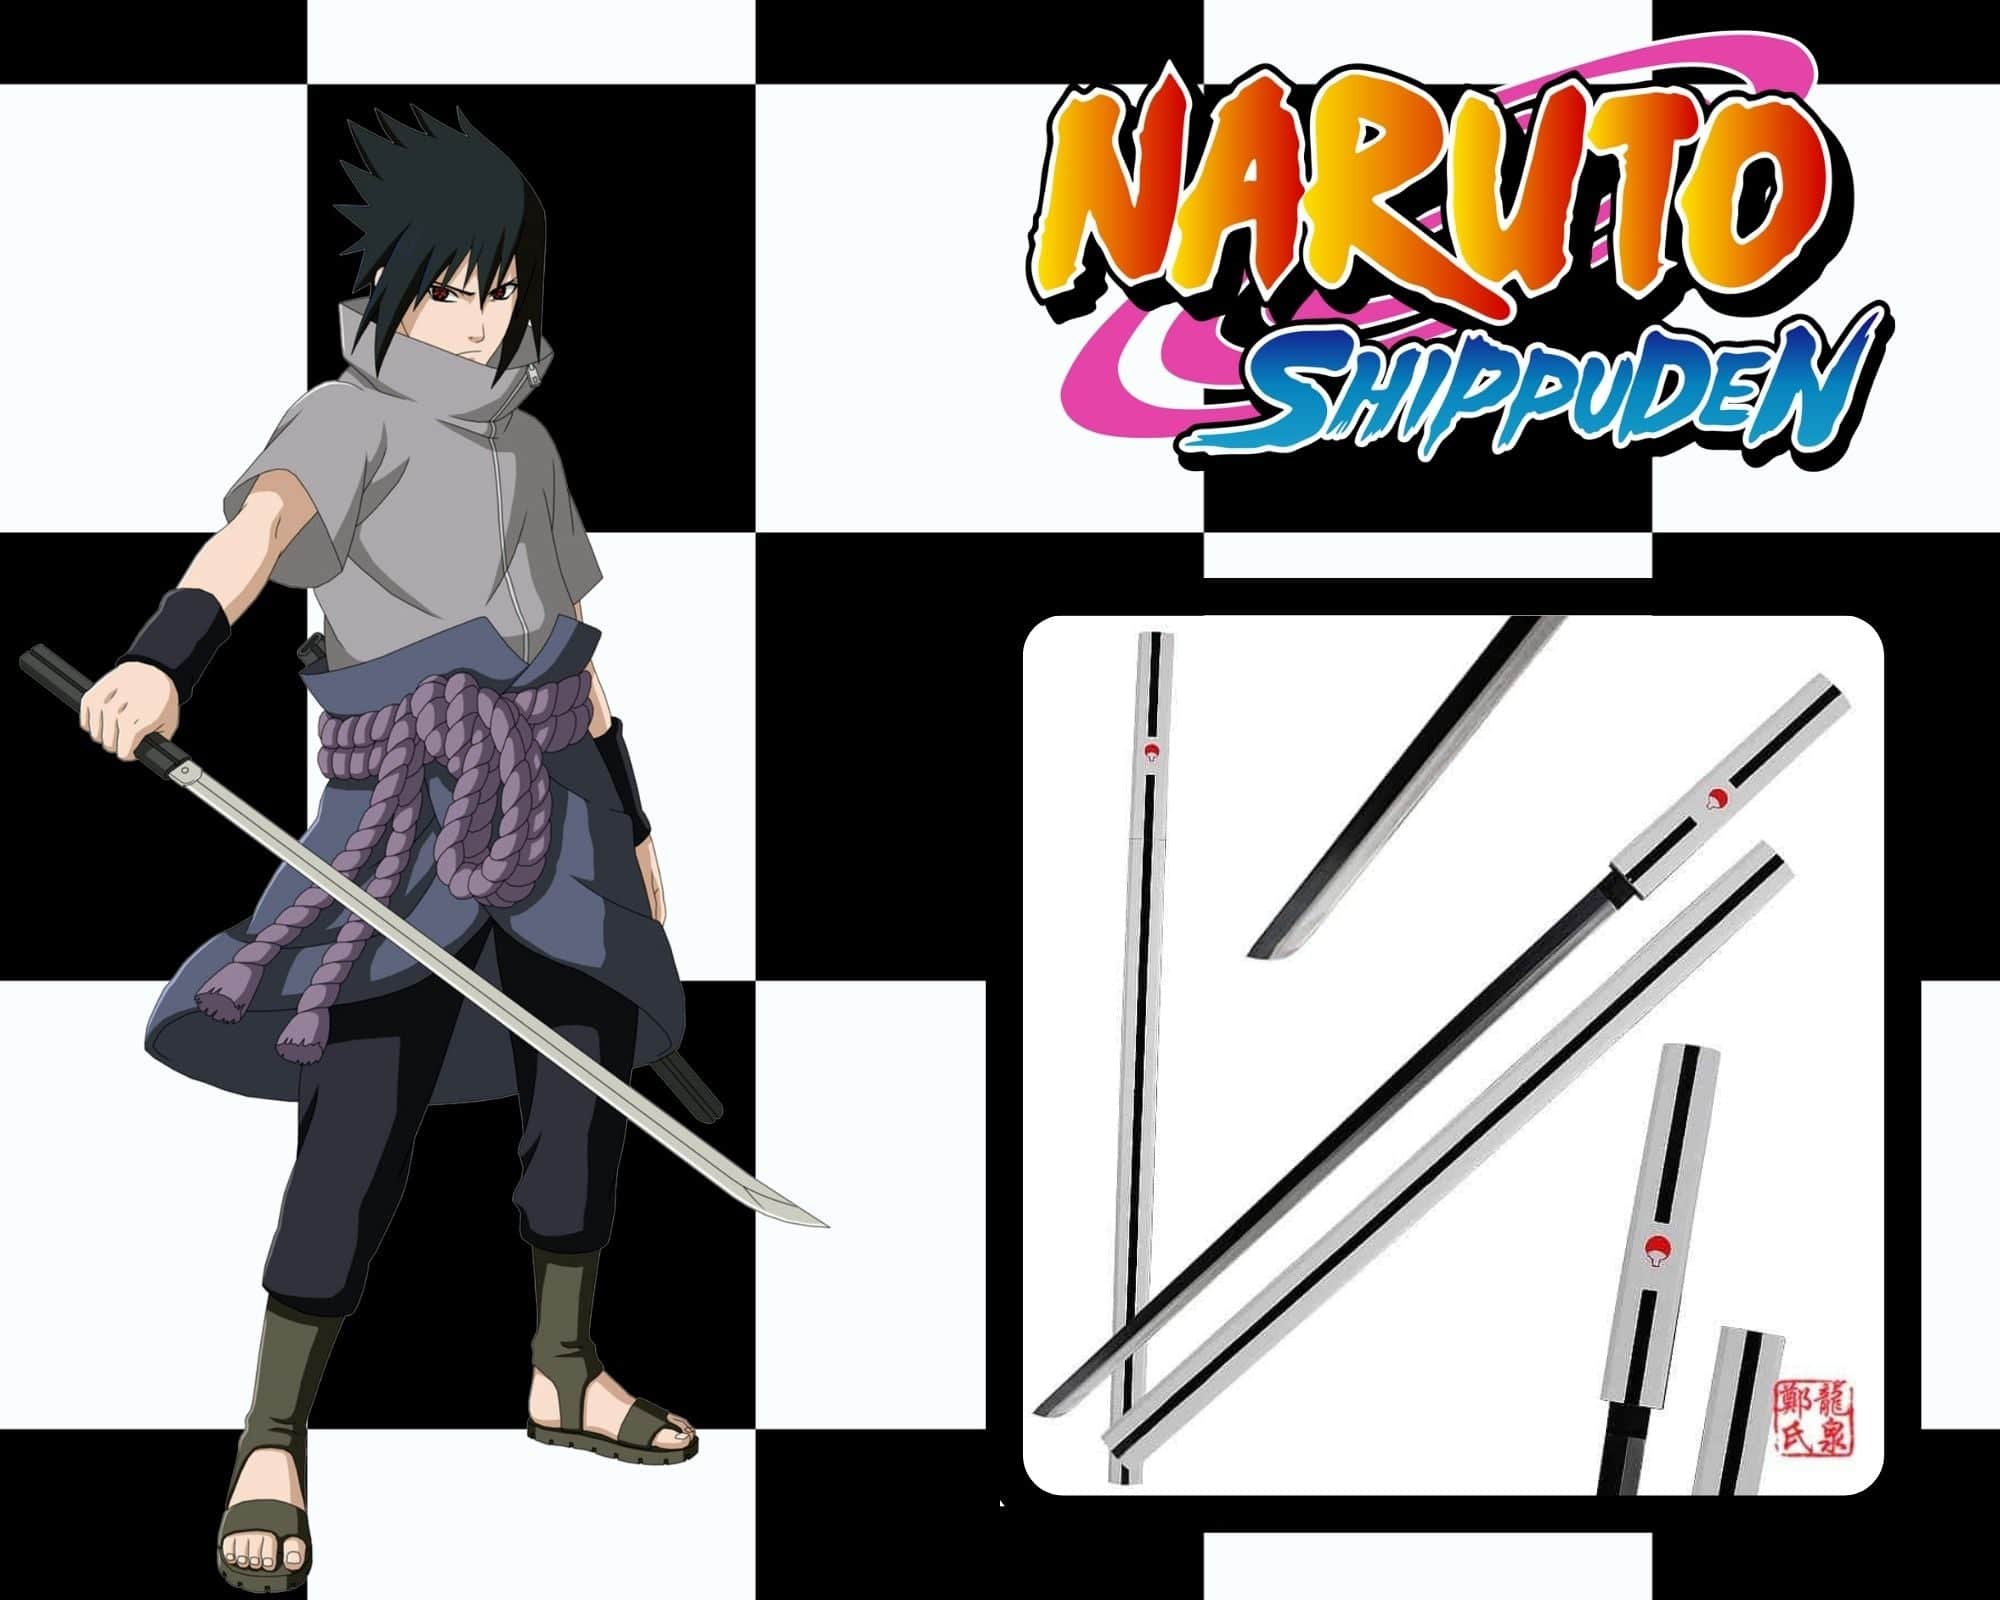 KATANA NARUTO: Réplique épée manga - Katana Anime